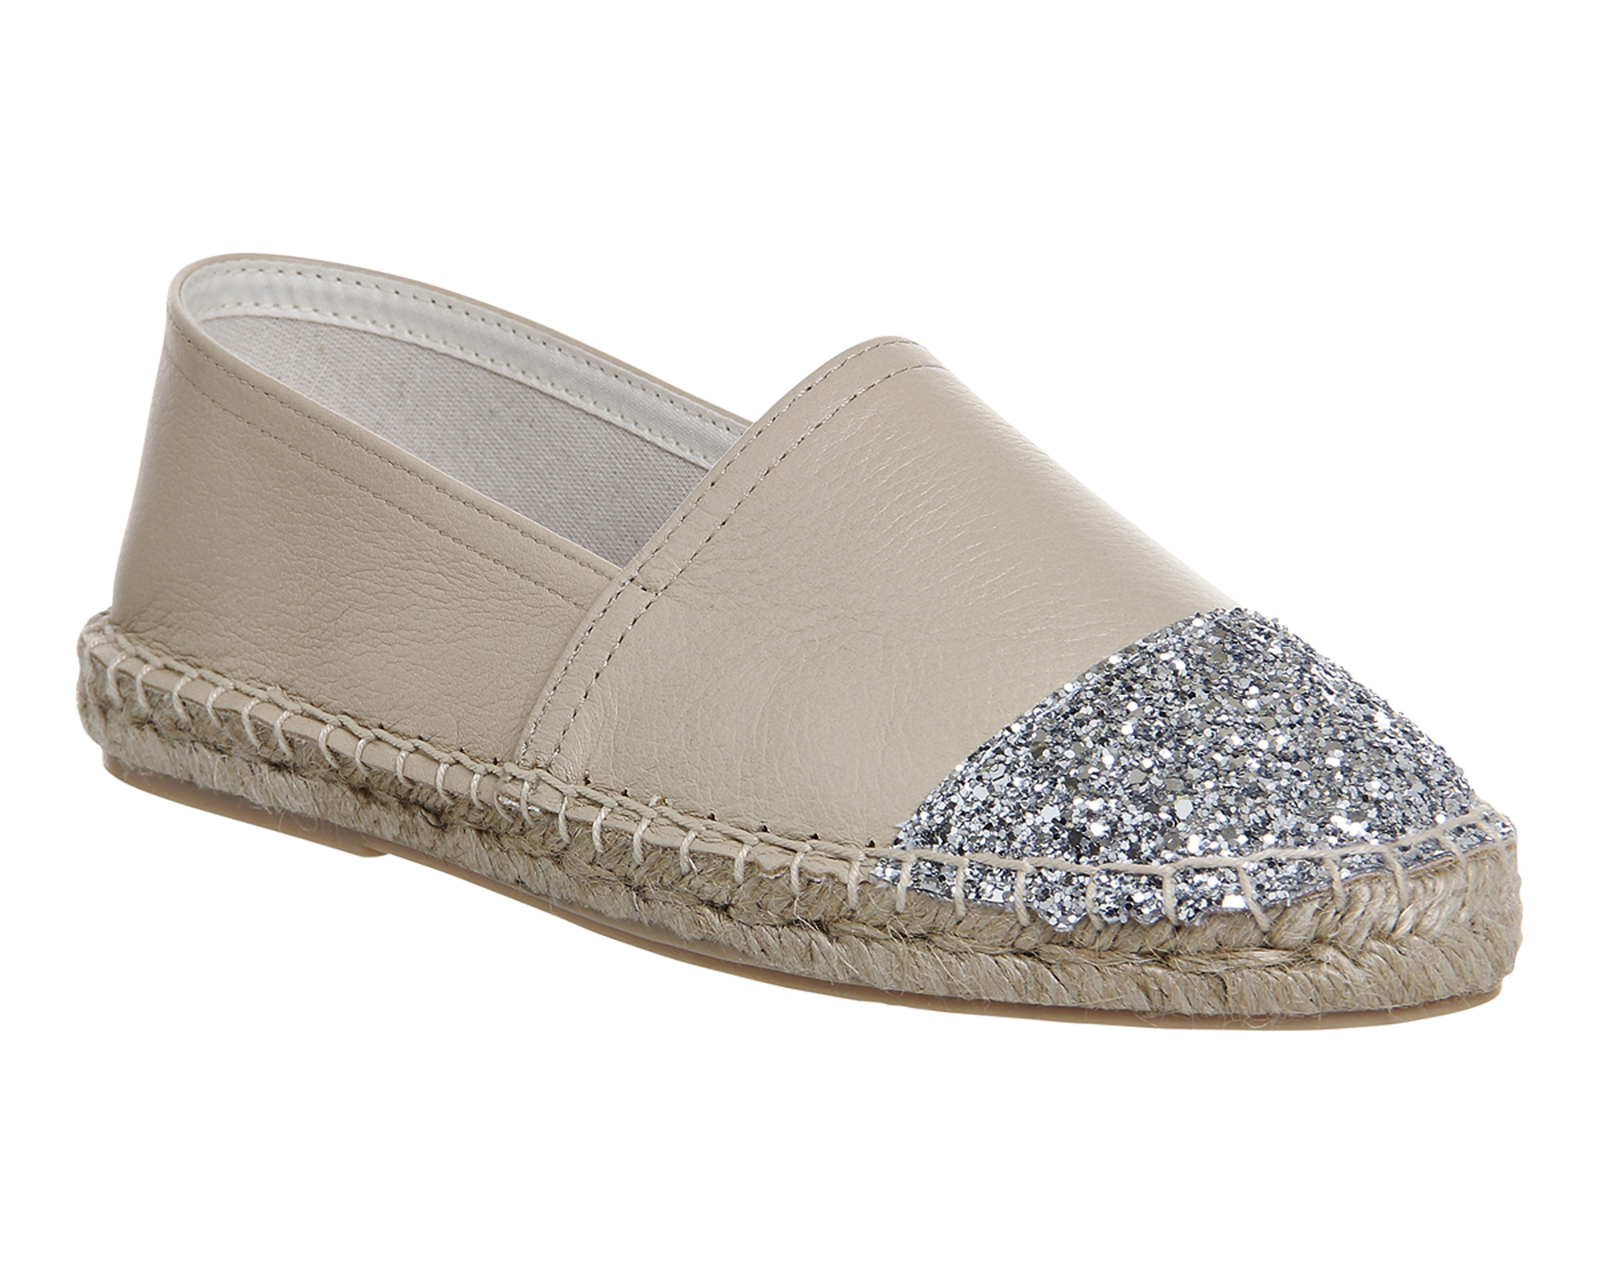 glitter espadrilles sandals